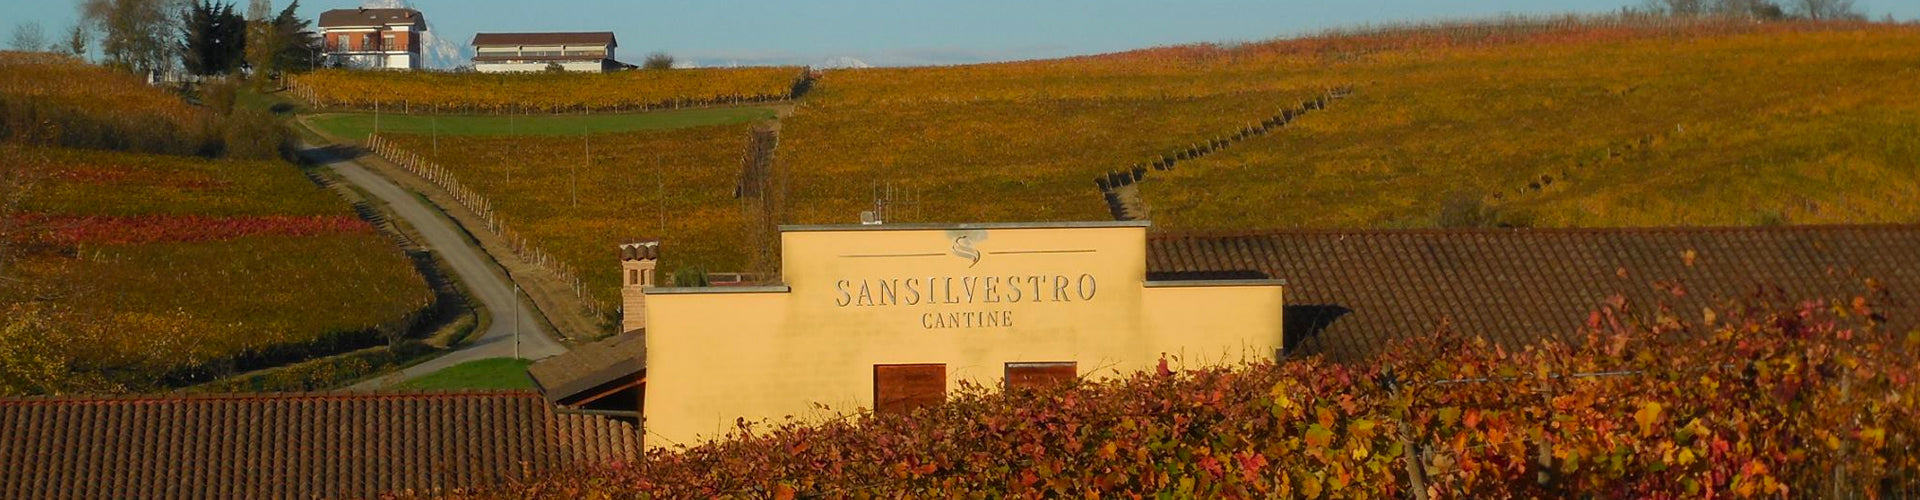 San Silvestro winery building amongst vineyards in Piemonte, Italy